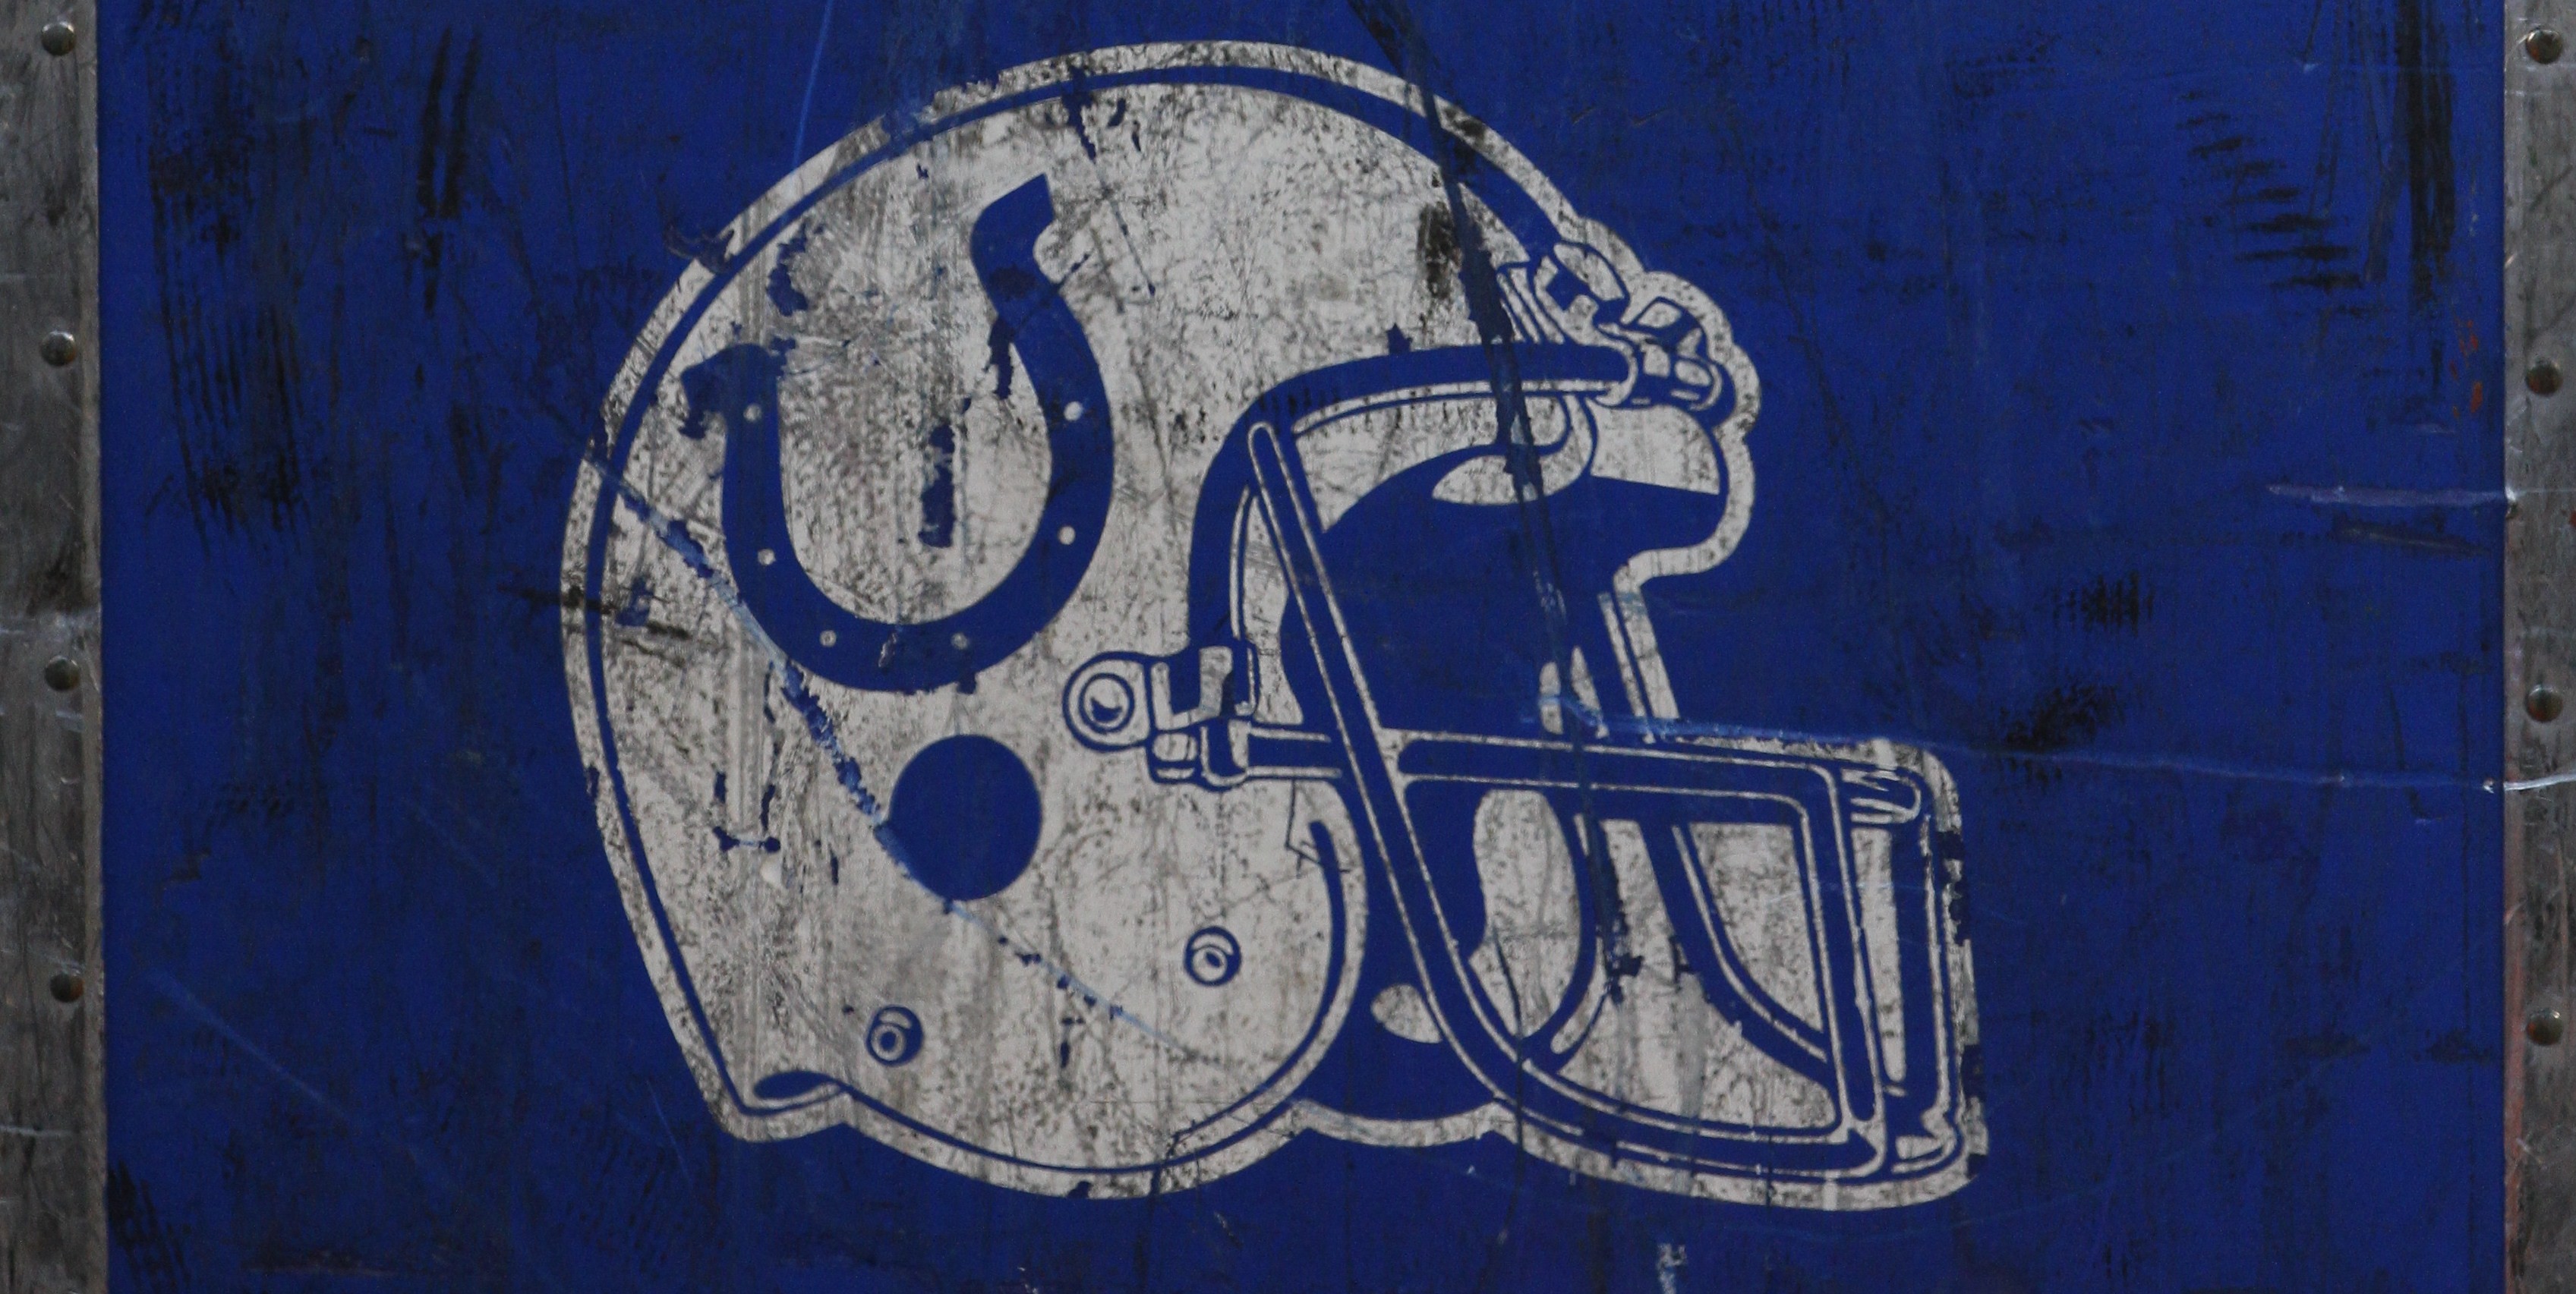 Indianapolis Colts Wallpaper Image